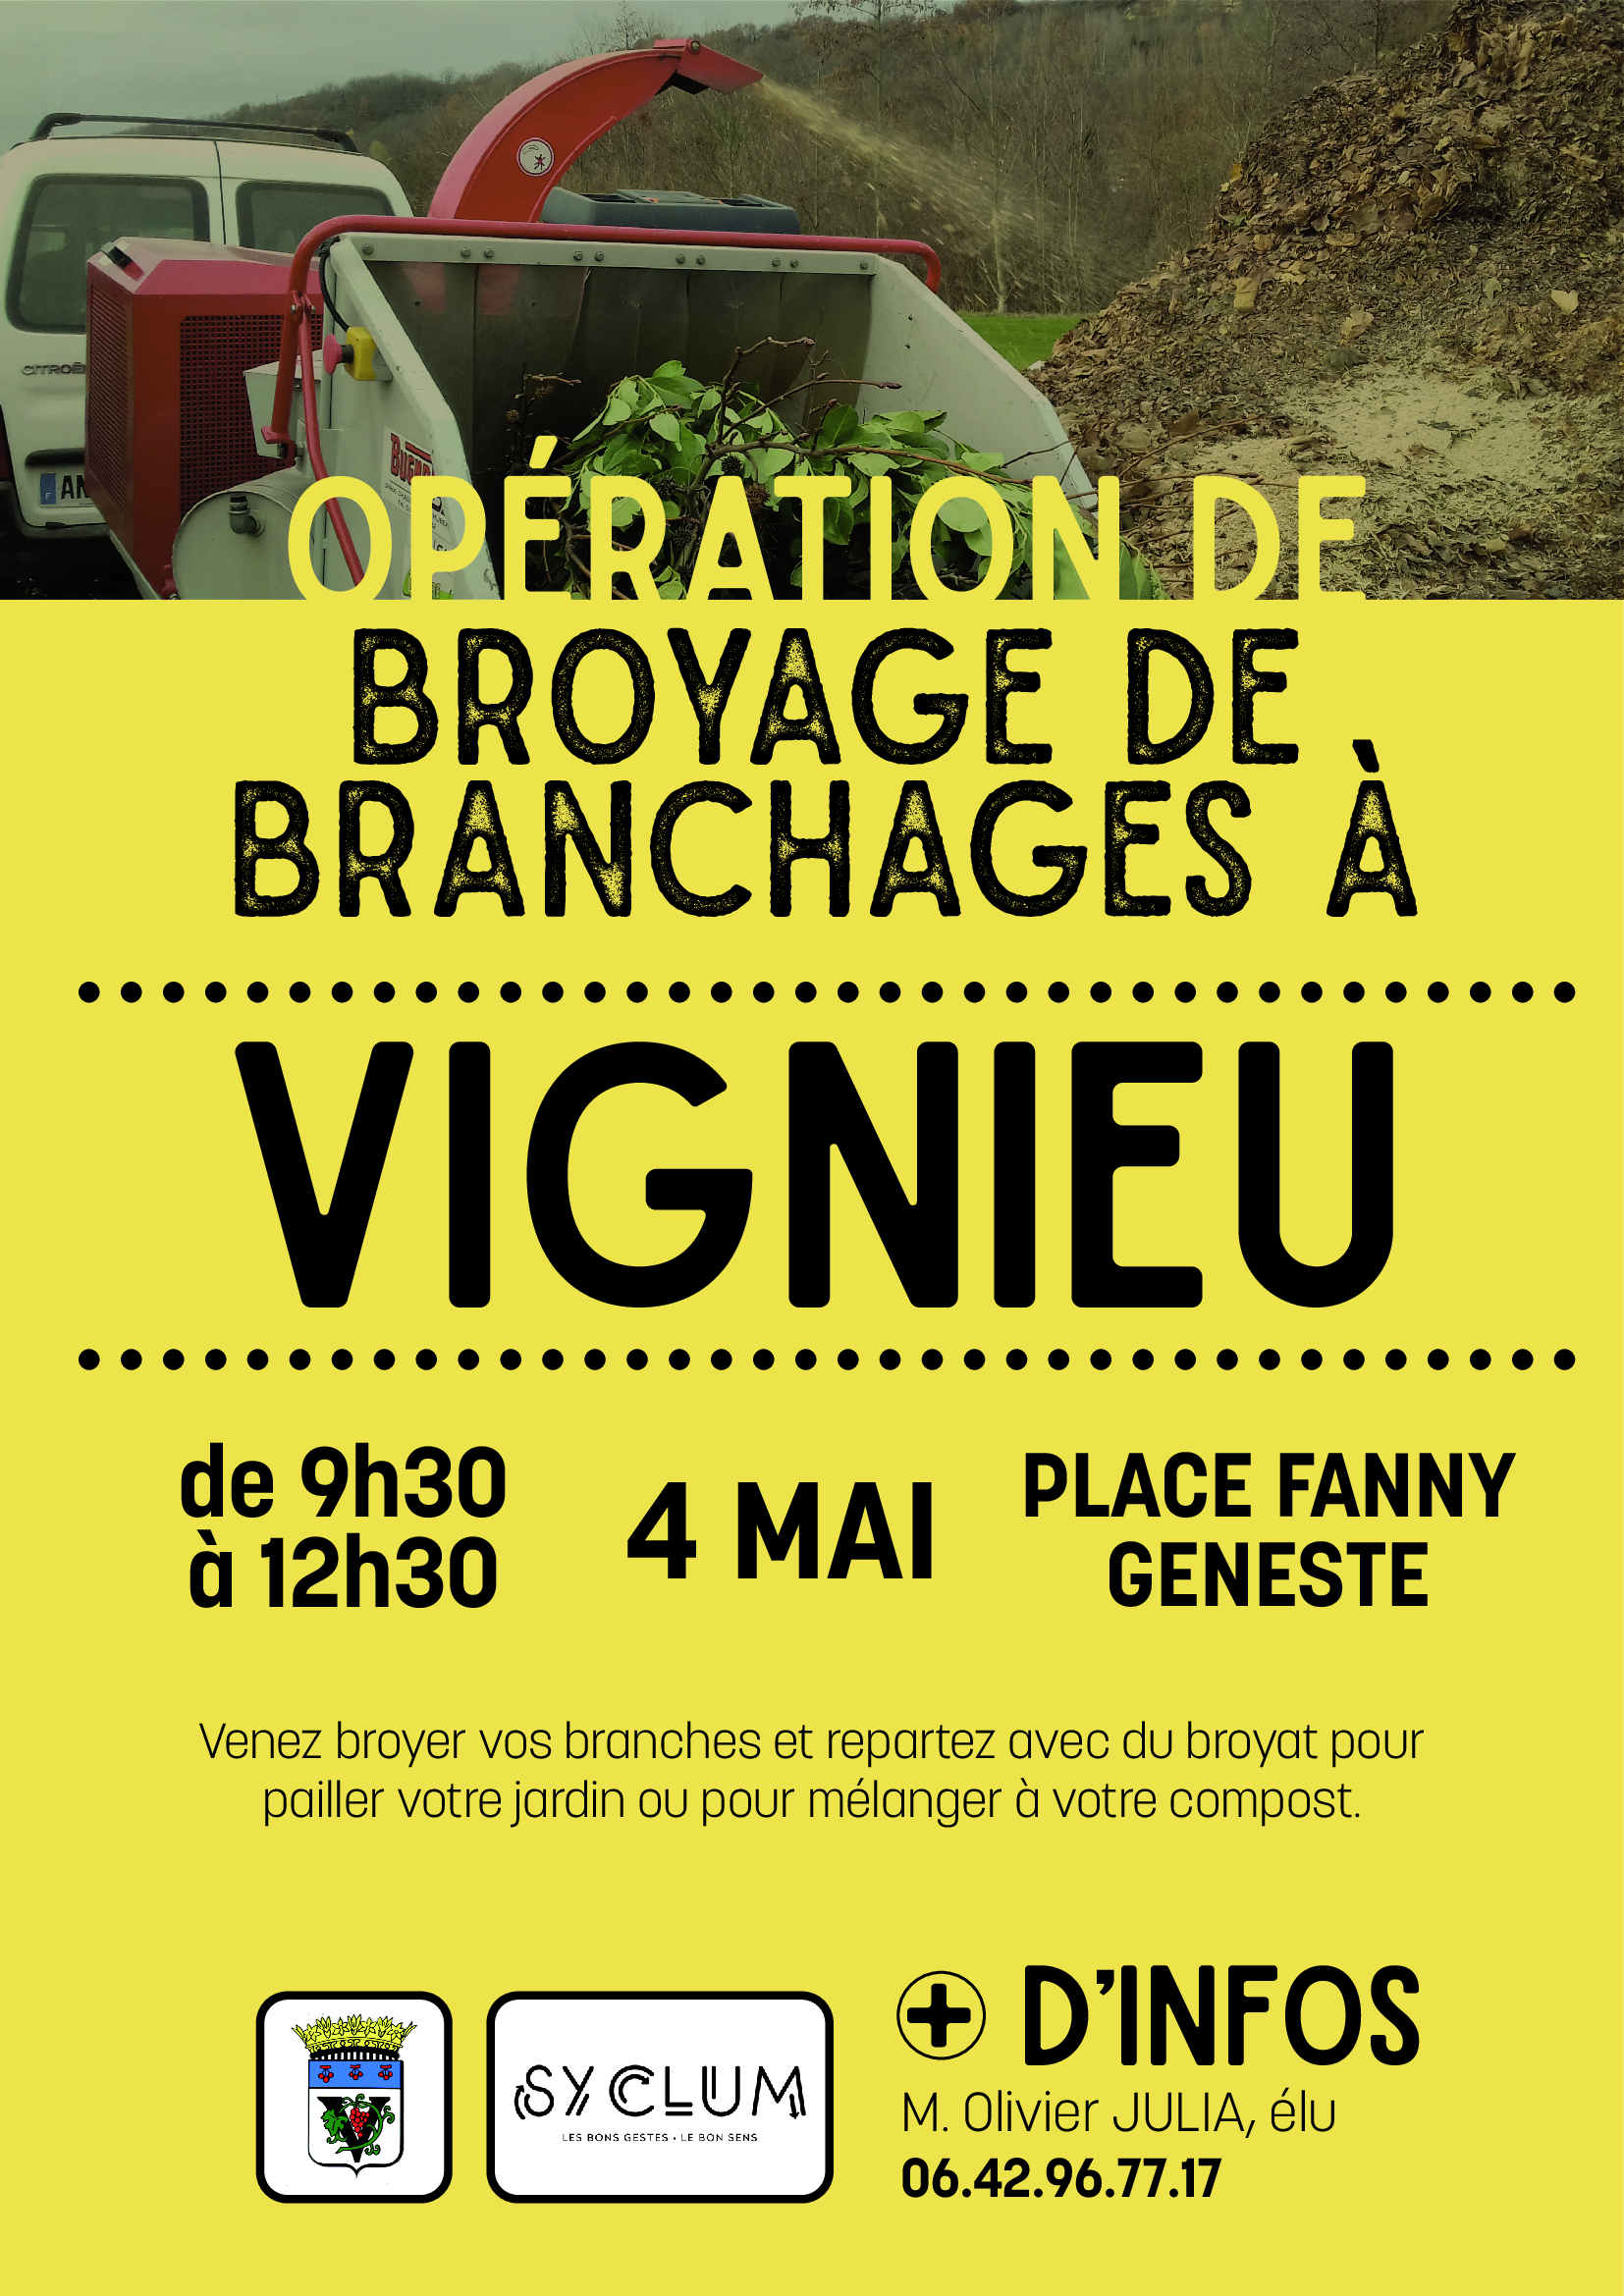 A4-Operation_broyage_branchages_vignieu.jpeg